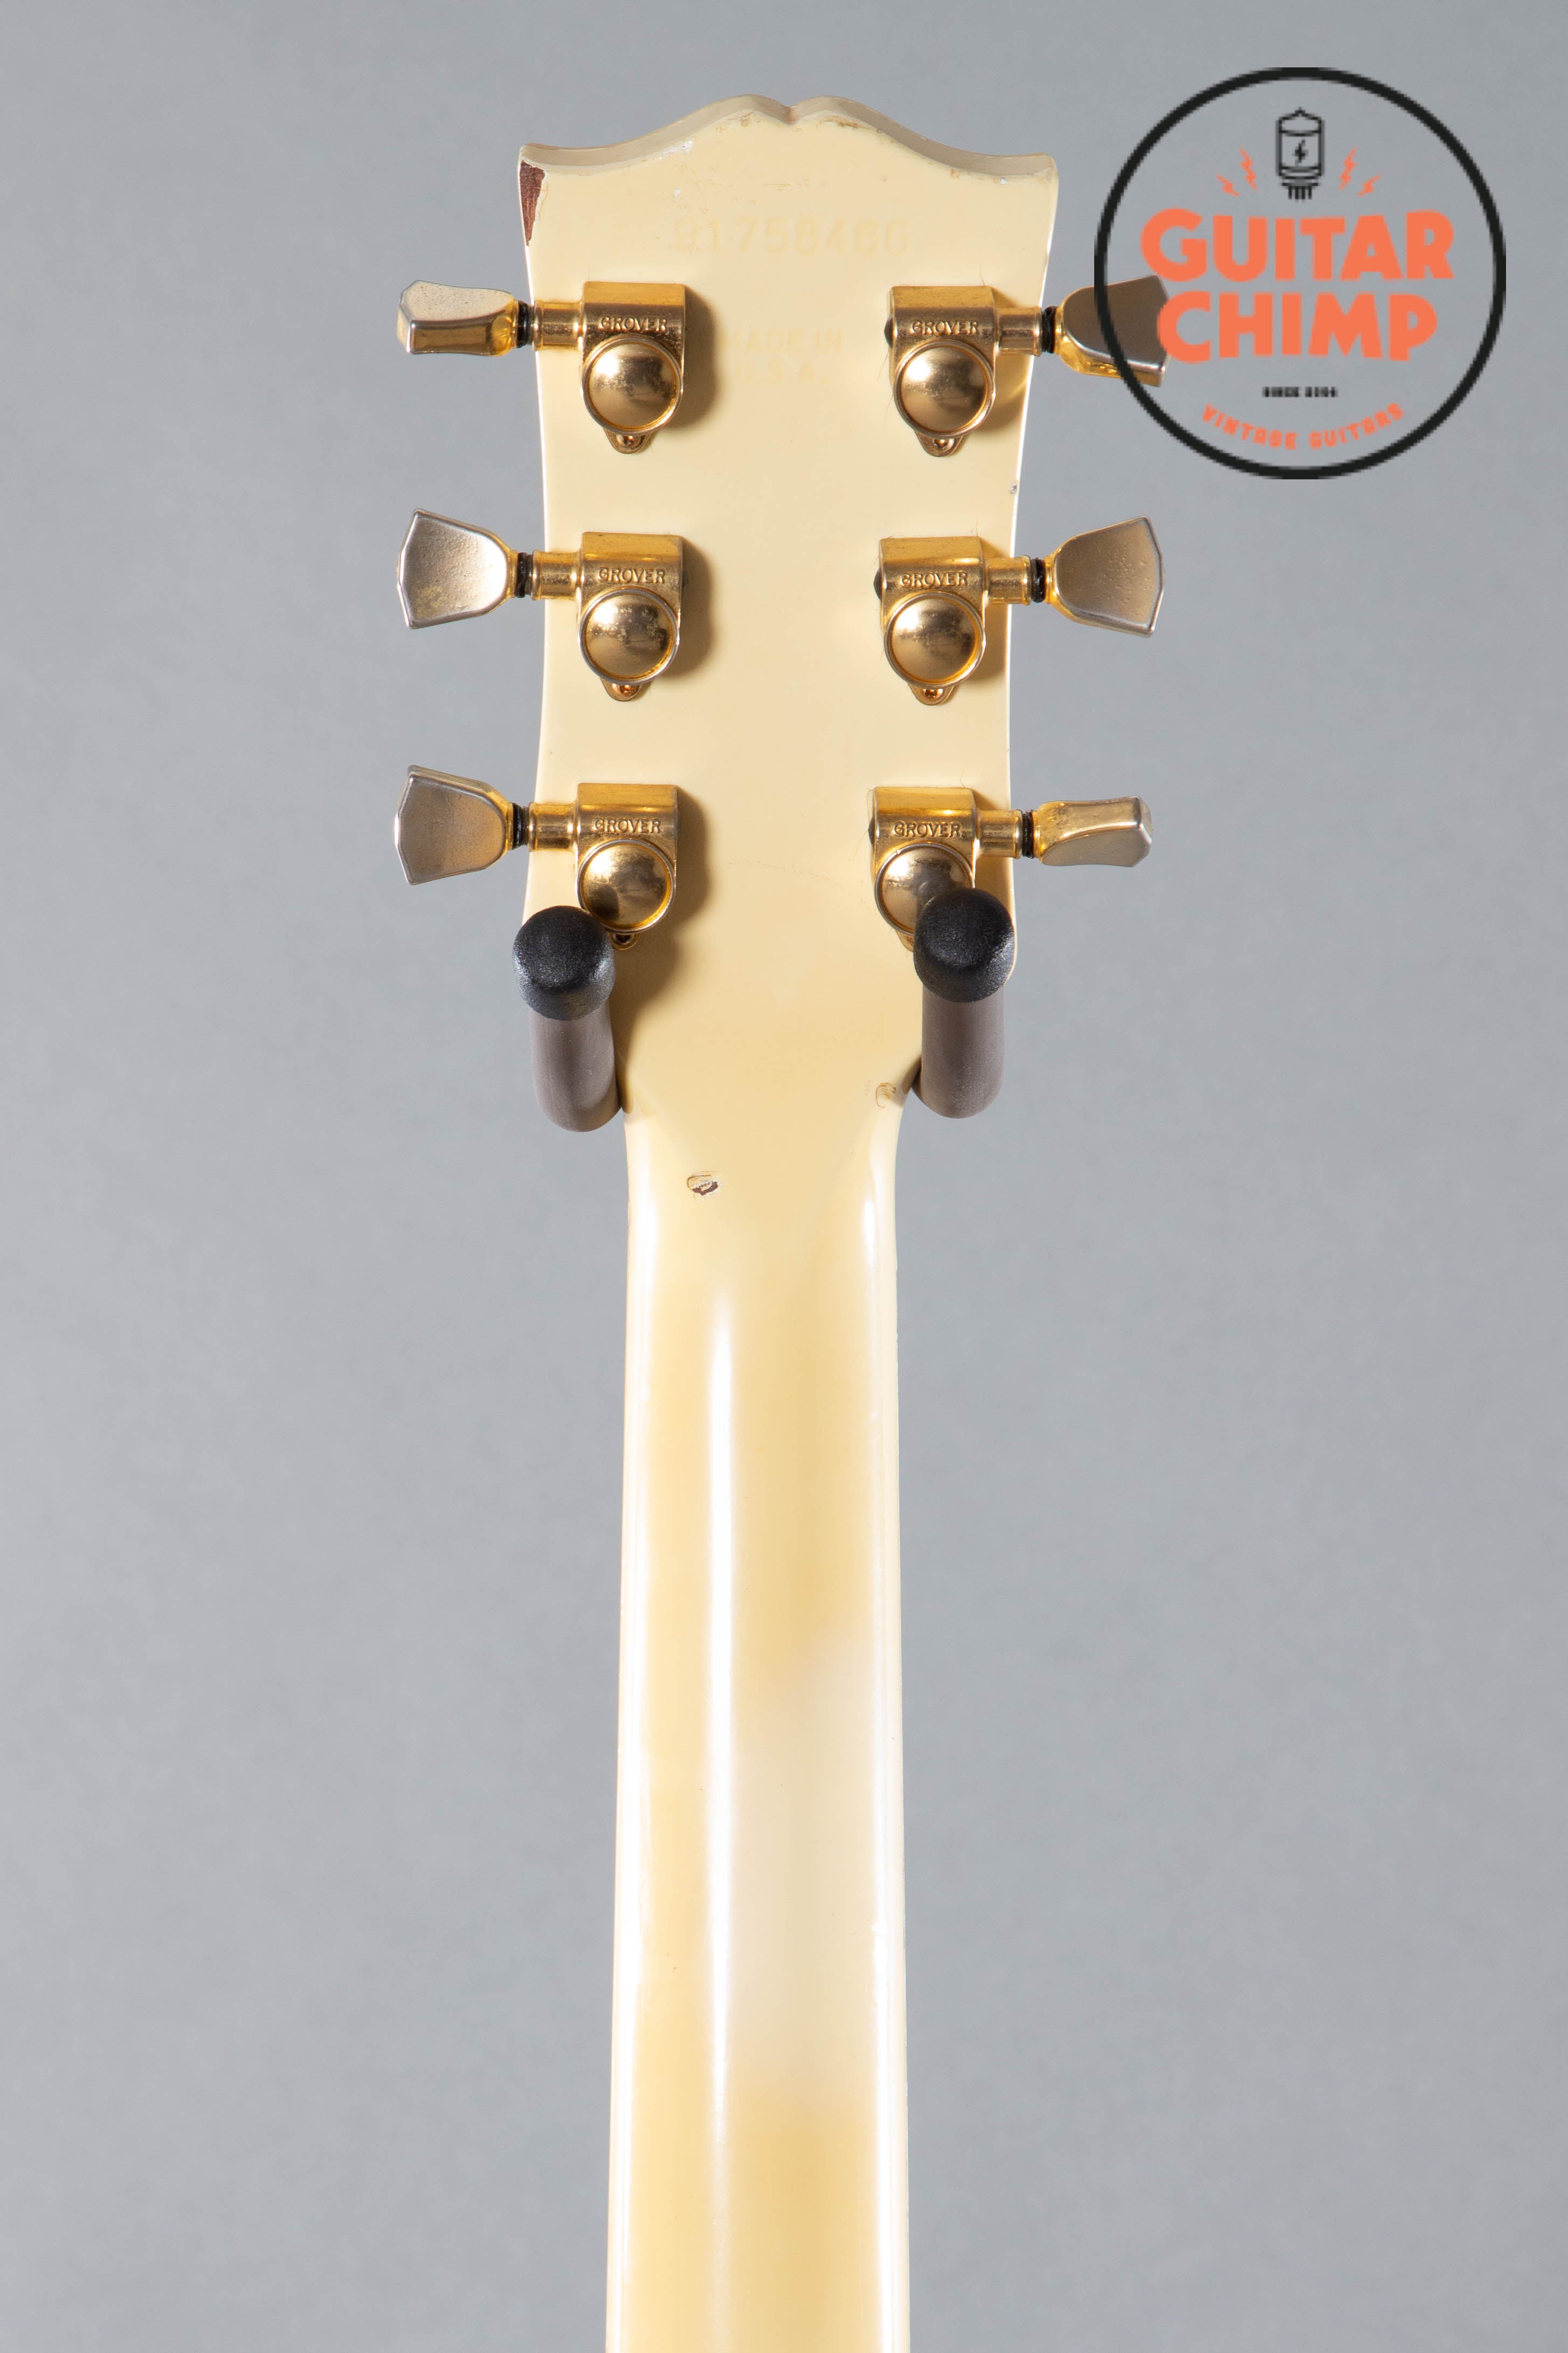 1998 Gibson Les Paul Custom Alpine White | Guitar Chimp